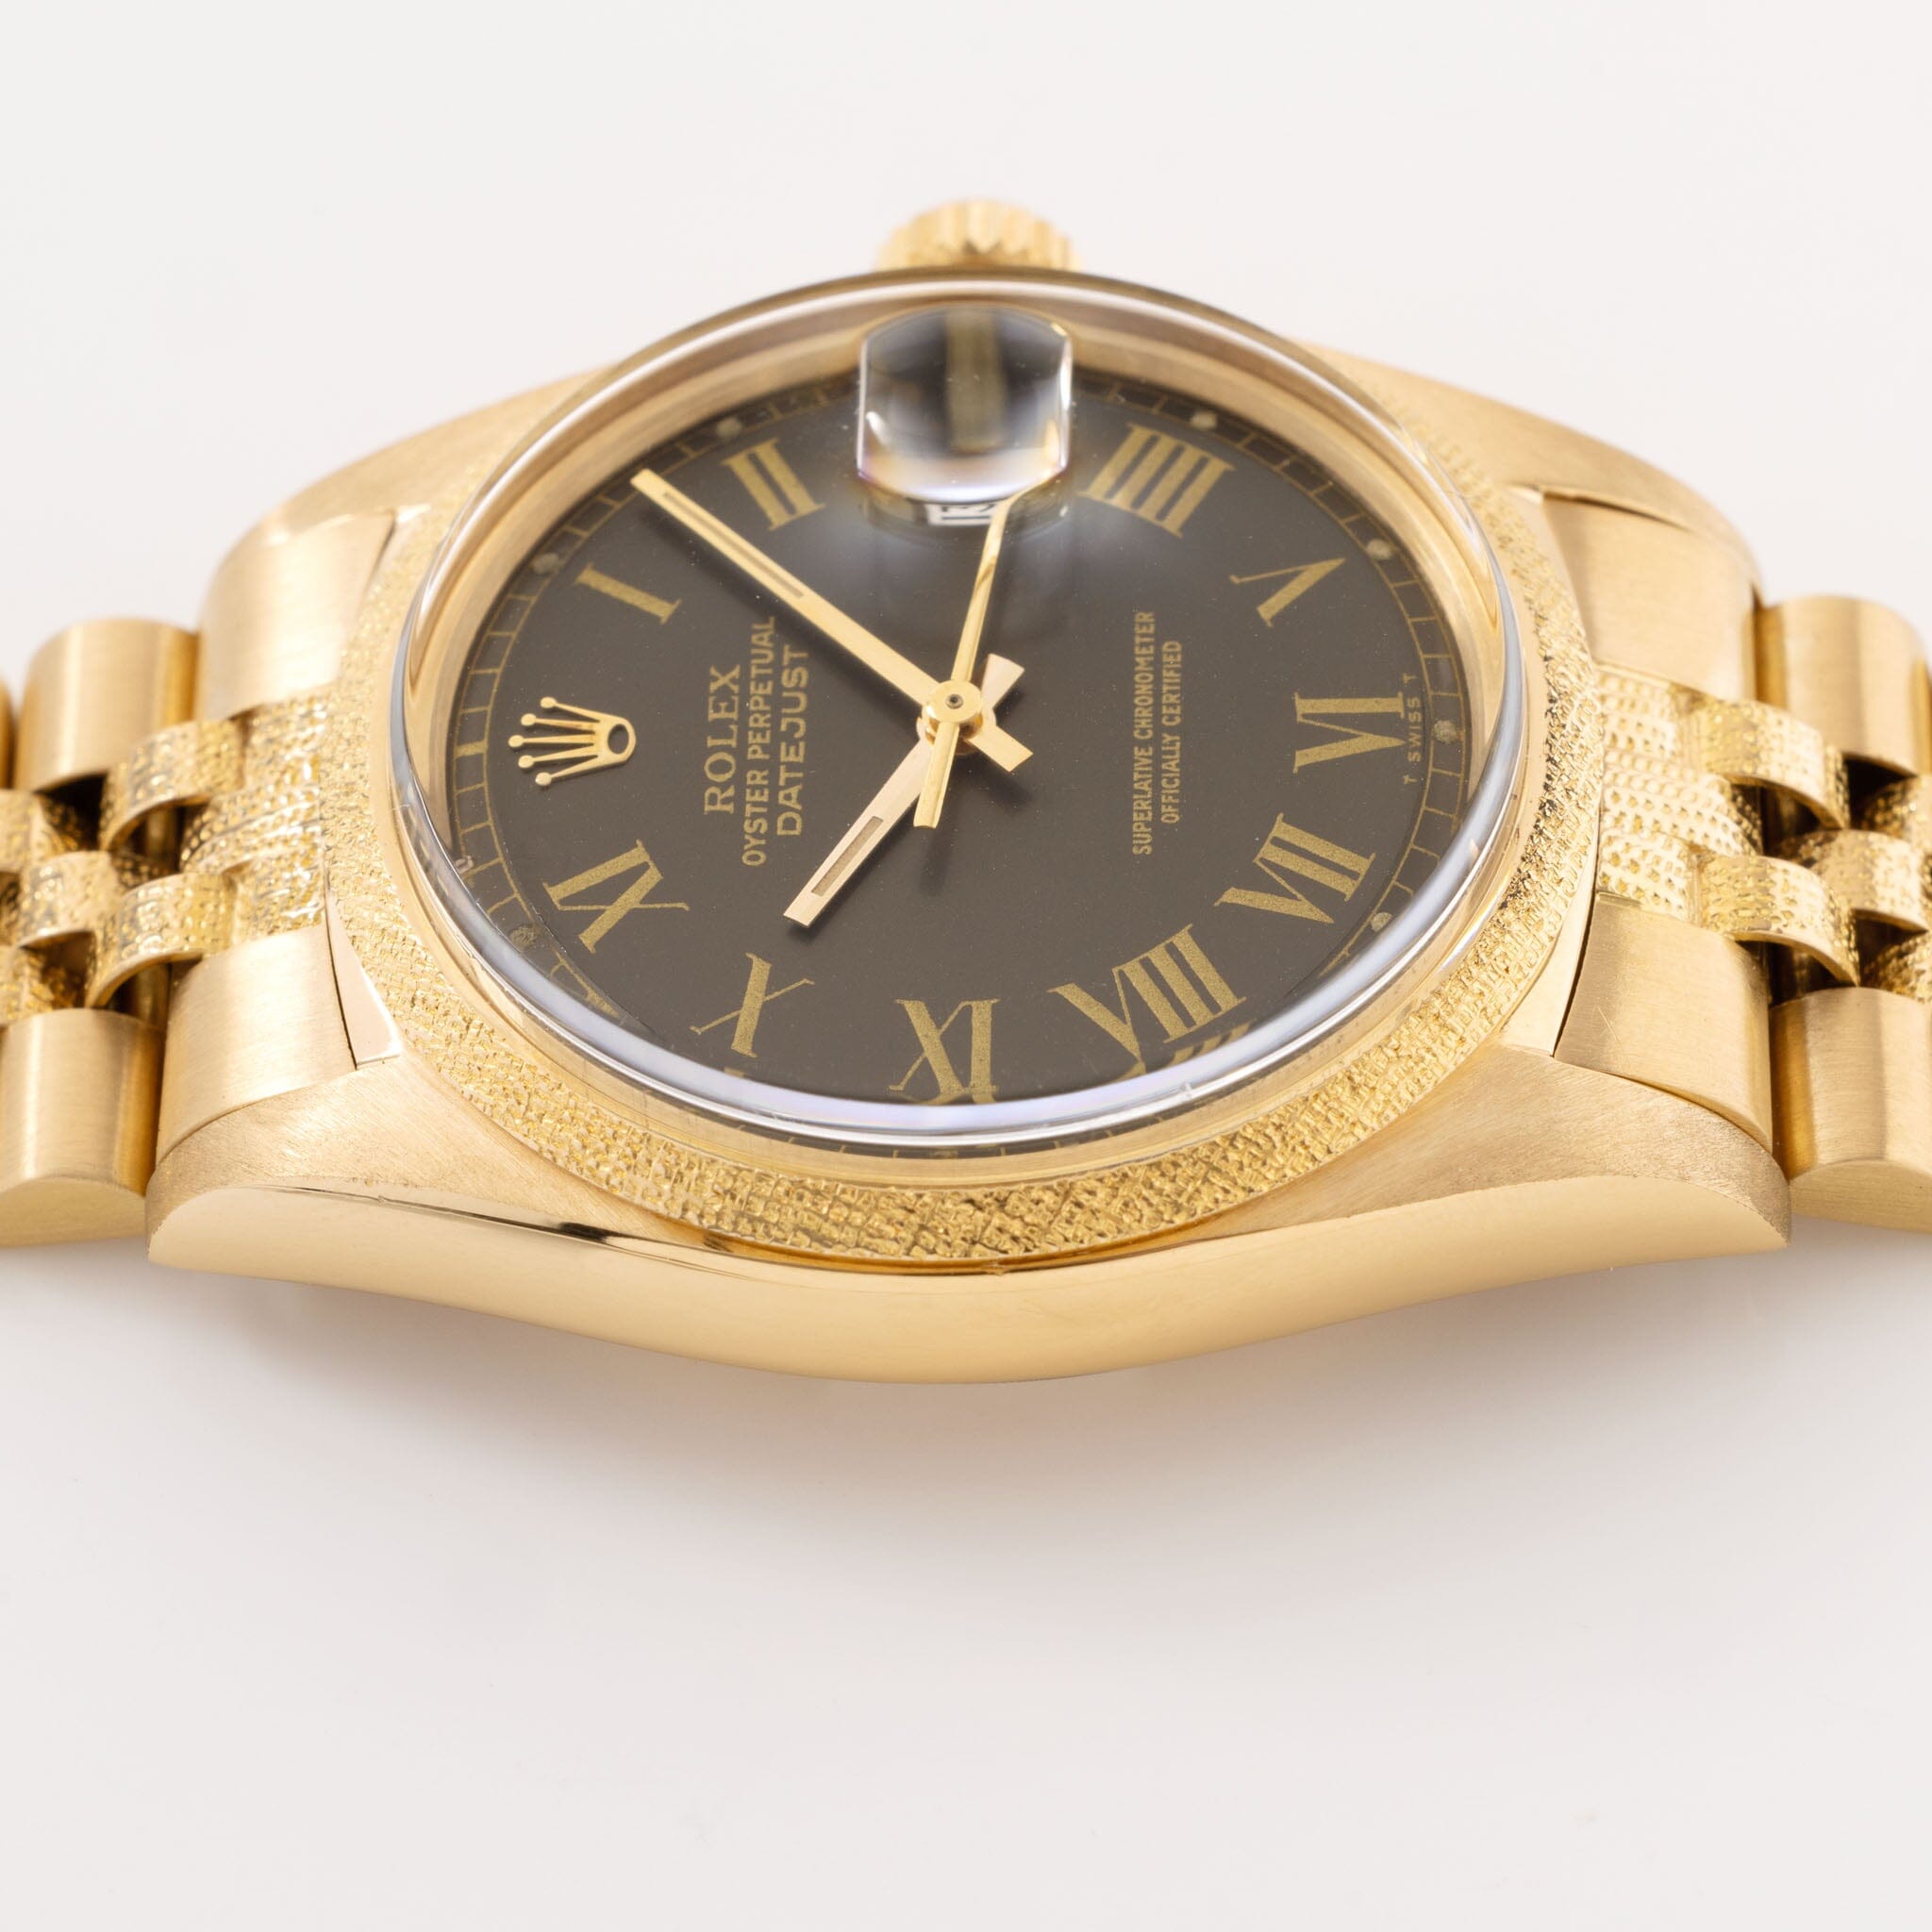 Rolex Datejust 1611 Yellow Gold Morellis Finish Diamond Dial